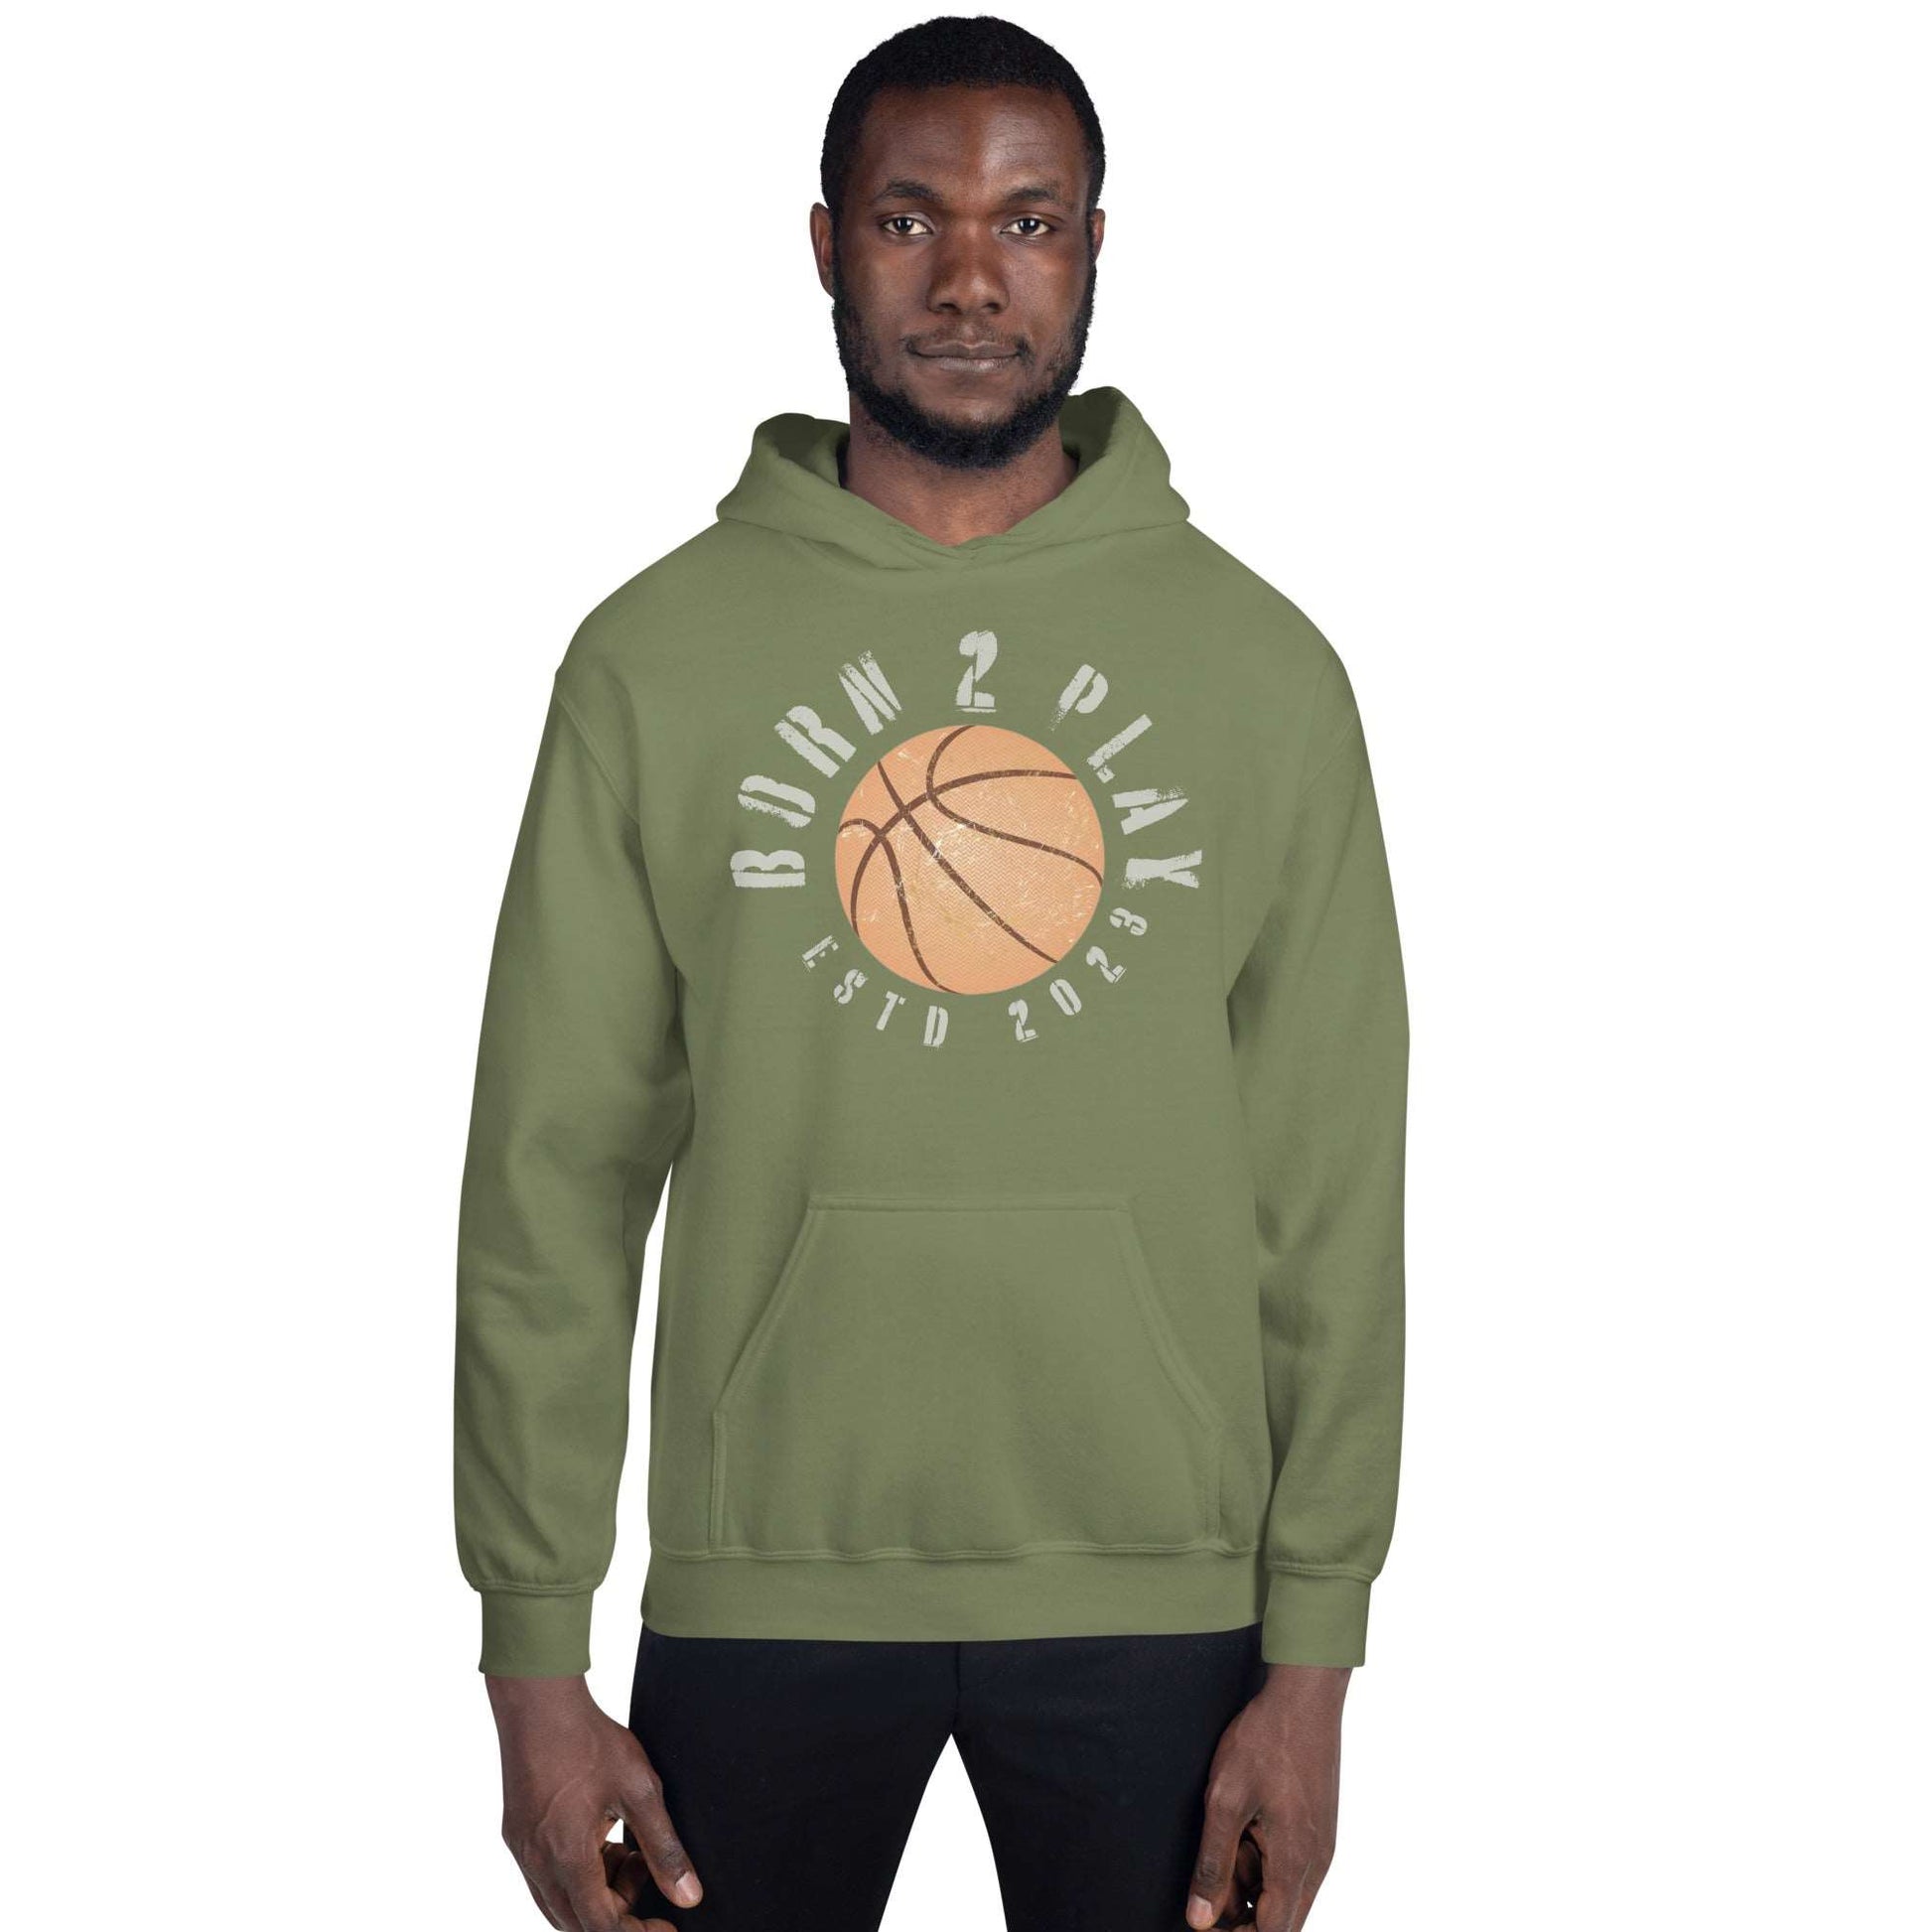 B2PA Hoodie Basketball